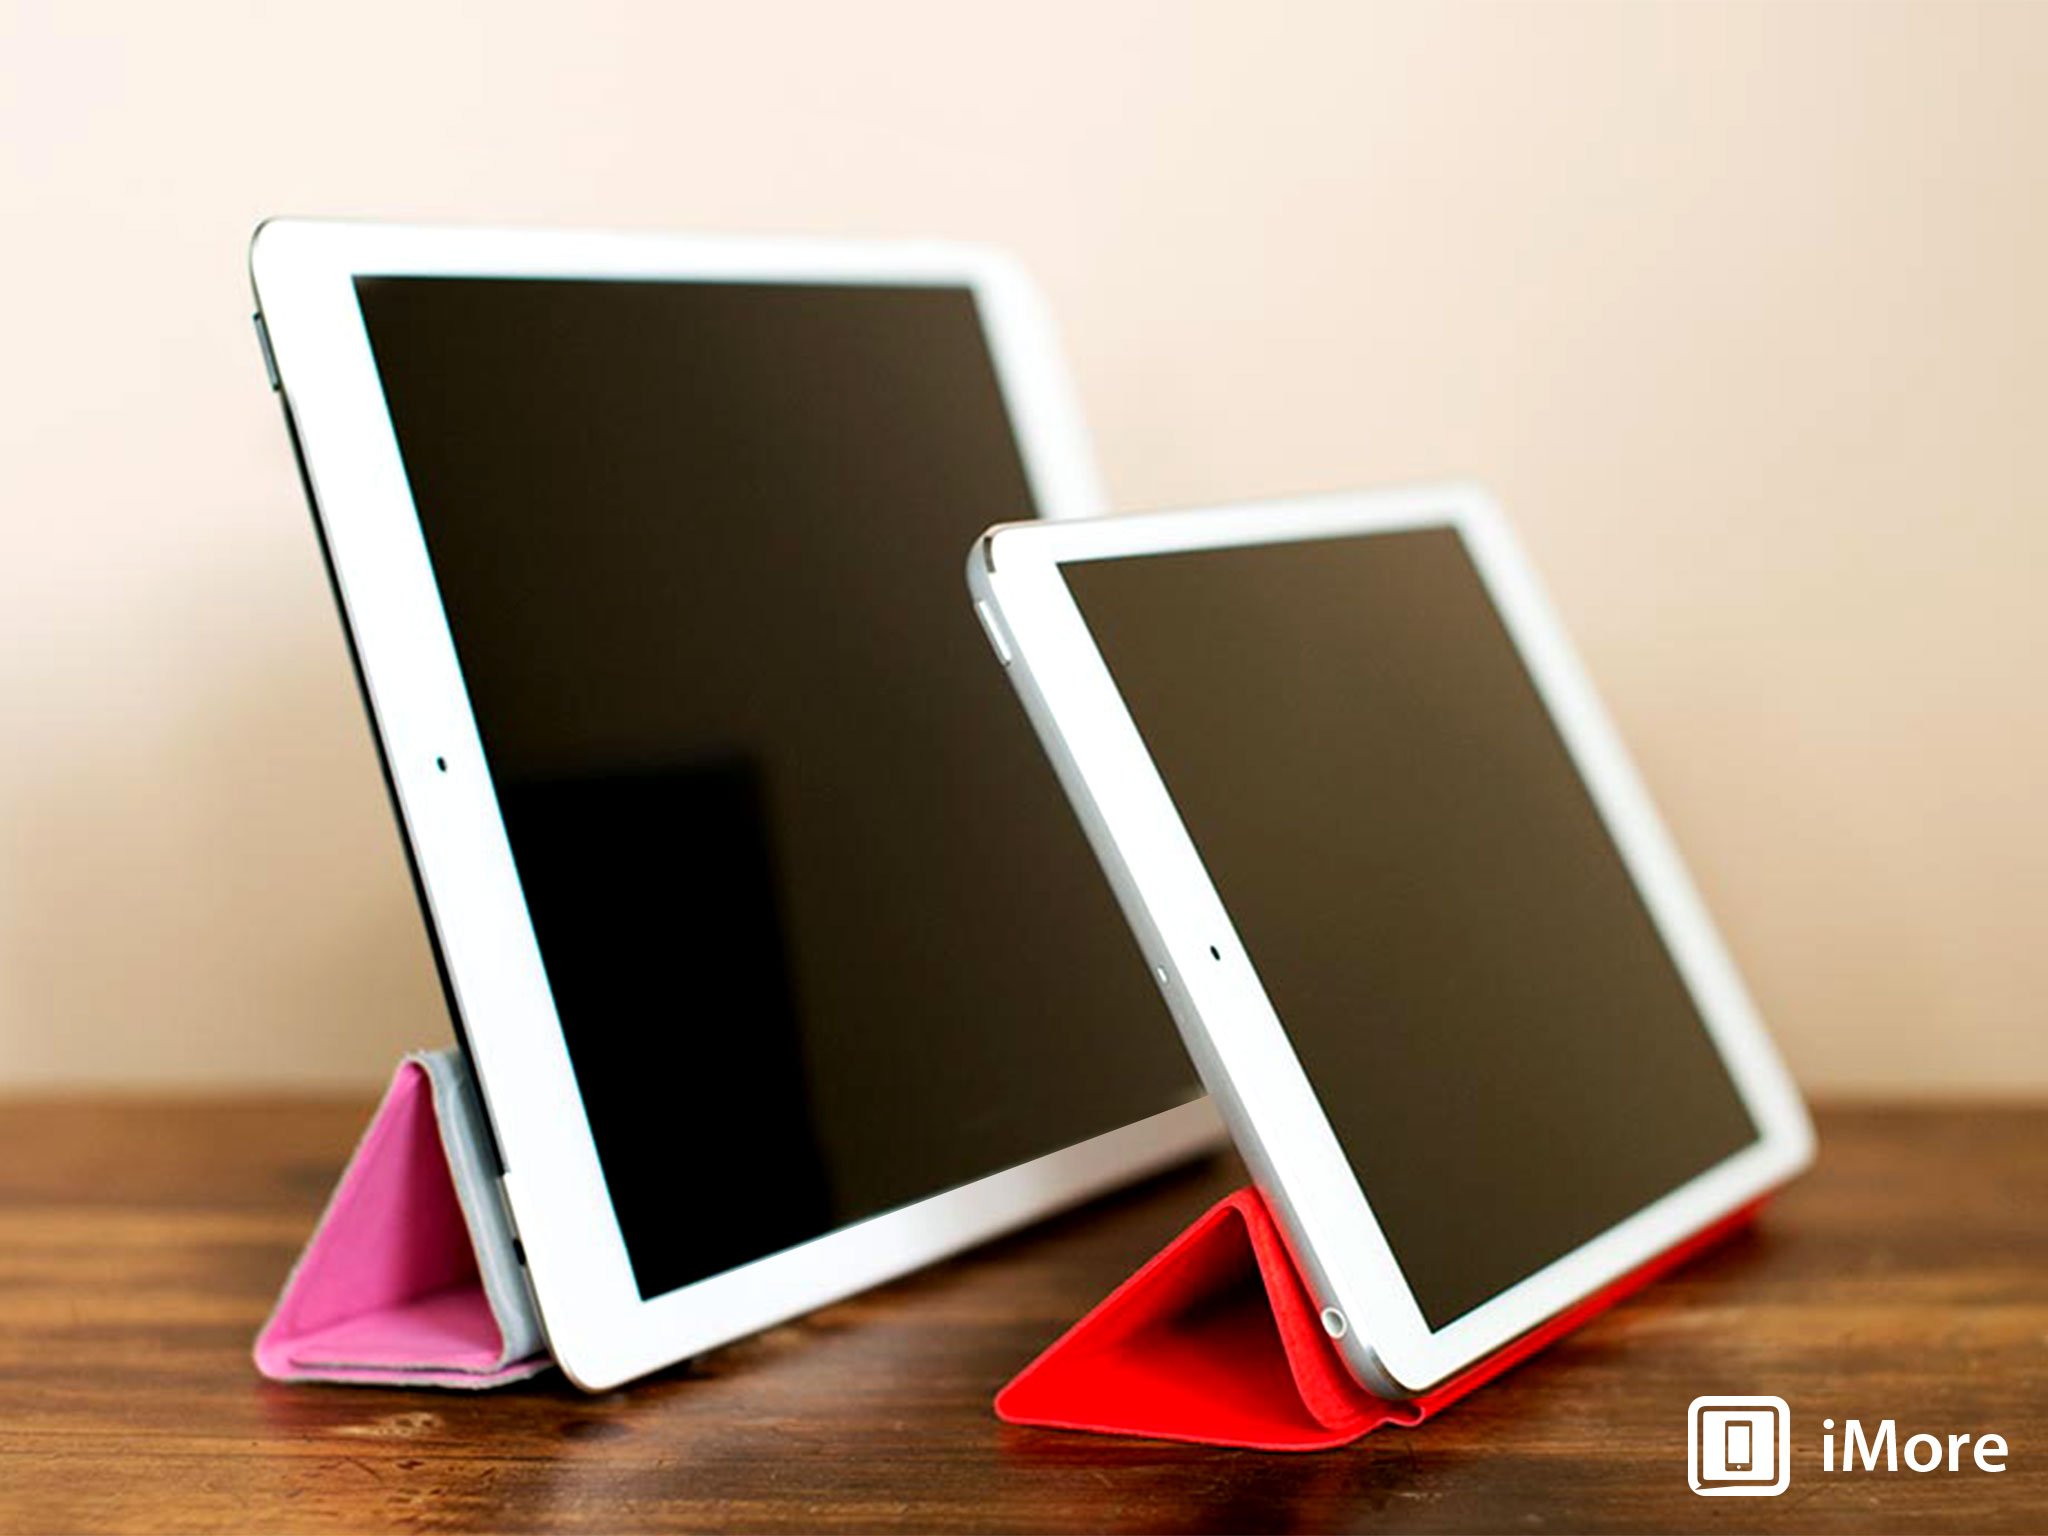 16GB vs. 32GB vs. 64GB vs. 128GB: Which iPad Air or Retina iPad mini